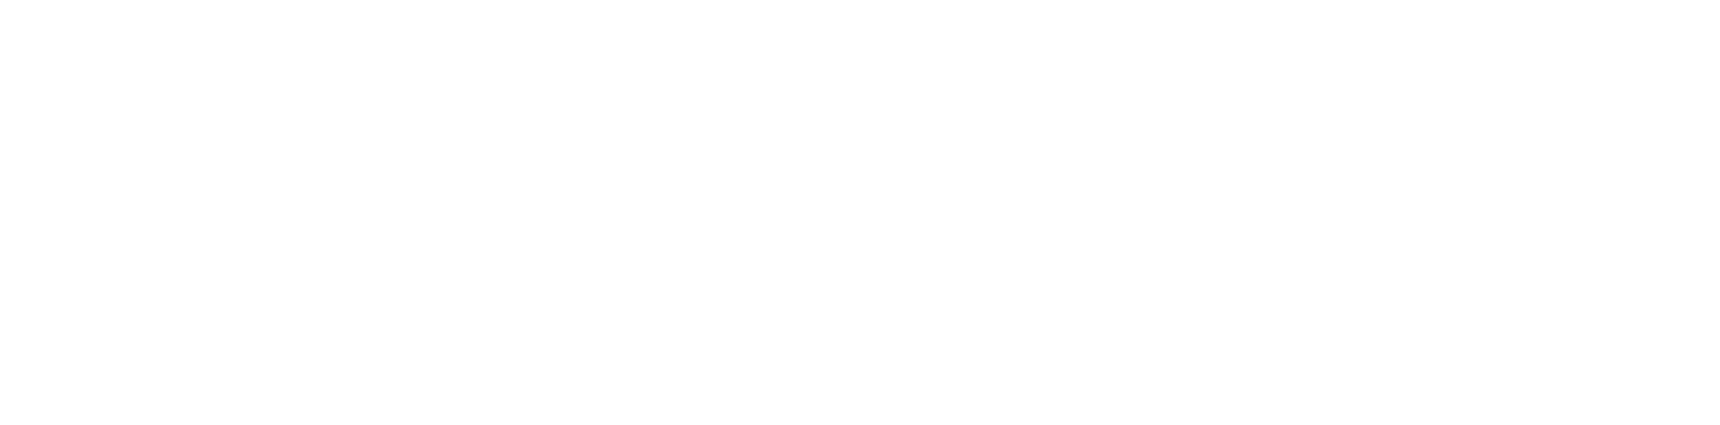 ict law center Logo.